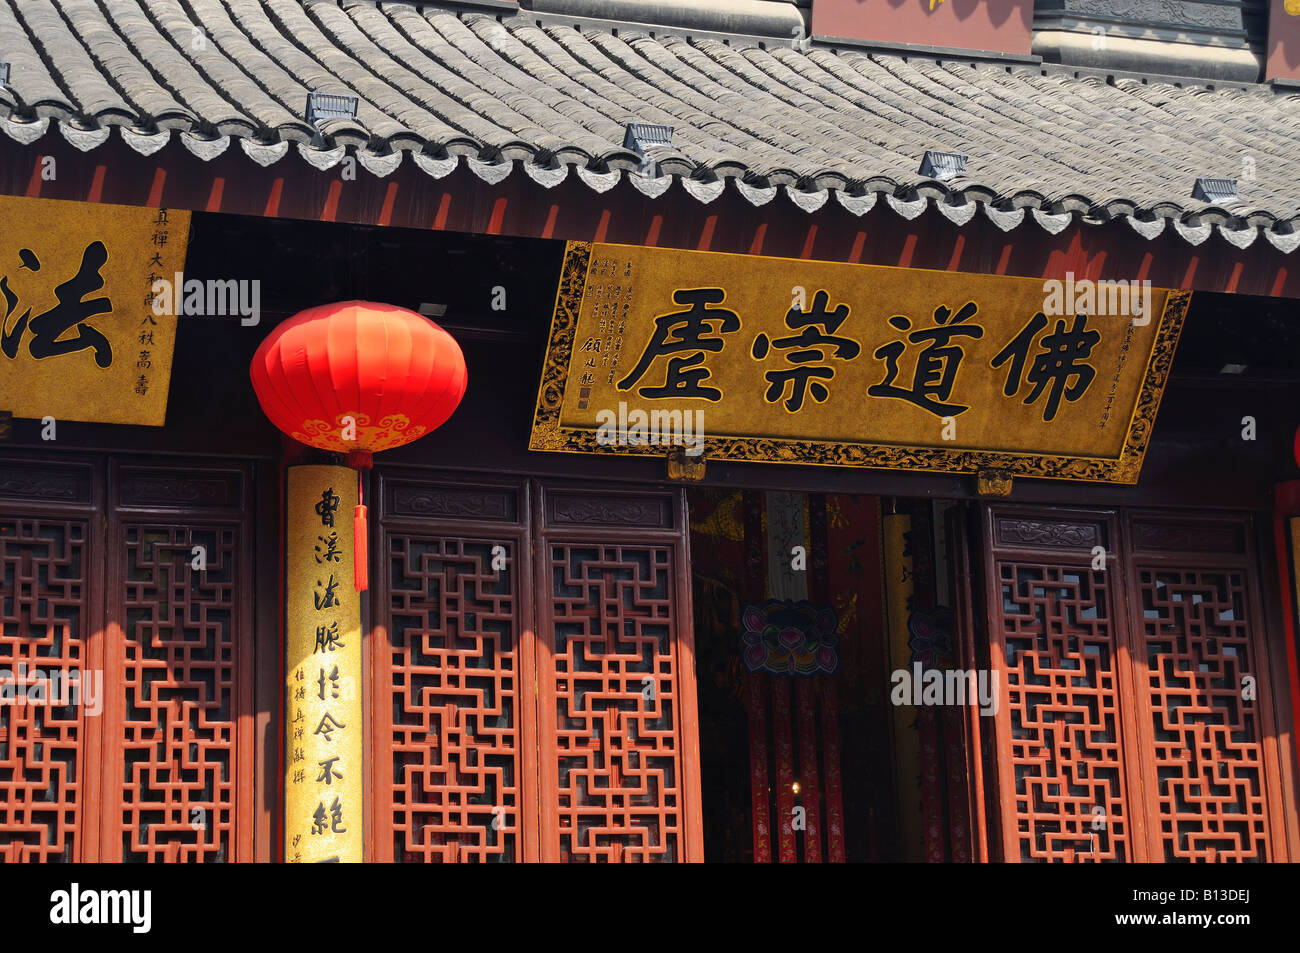 Lattice work elaborately tiled roof red lantern and inscribed motto above entrance to the jade Buddha pavillion Shanghai China Stock Photo